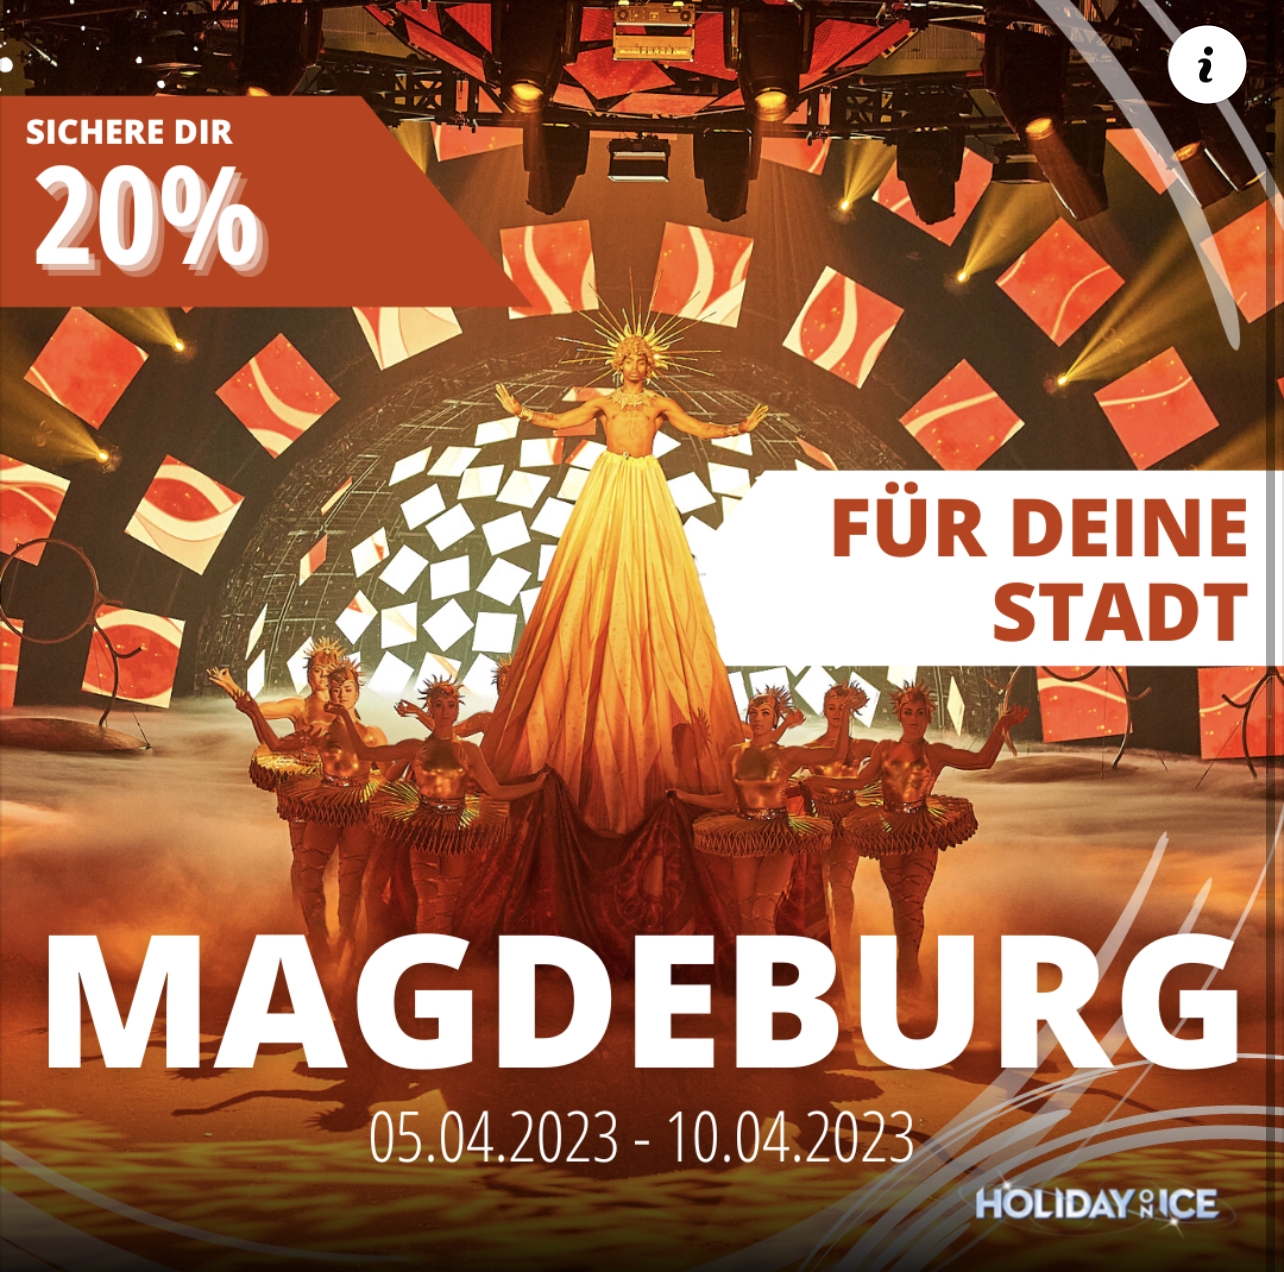 Beauty Palace Magdeburg: 10% Rabatt auf Nägel